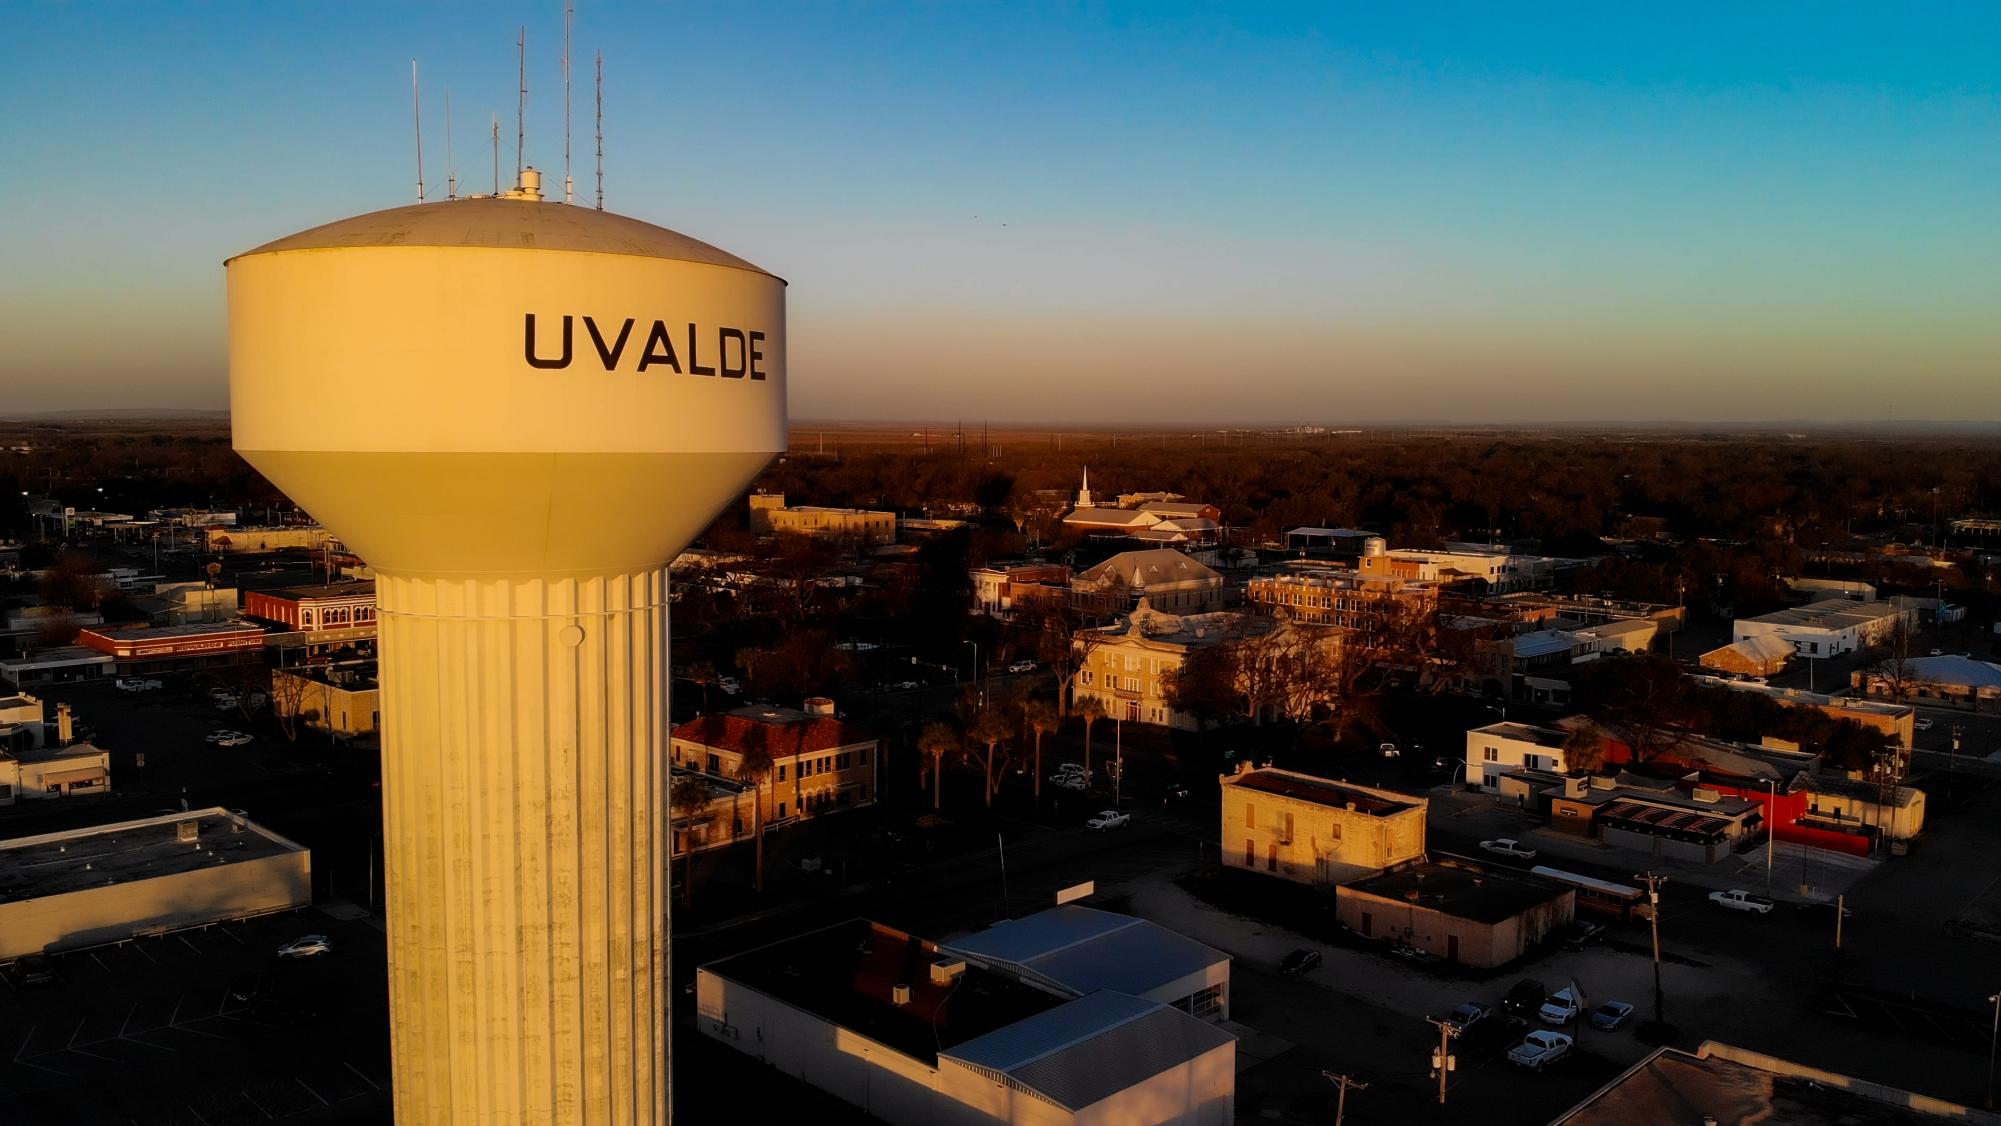 Water tower in Uvalde, Texas.